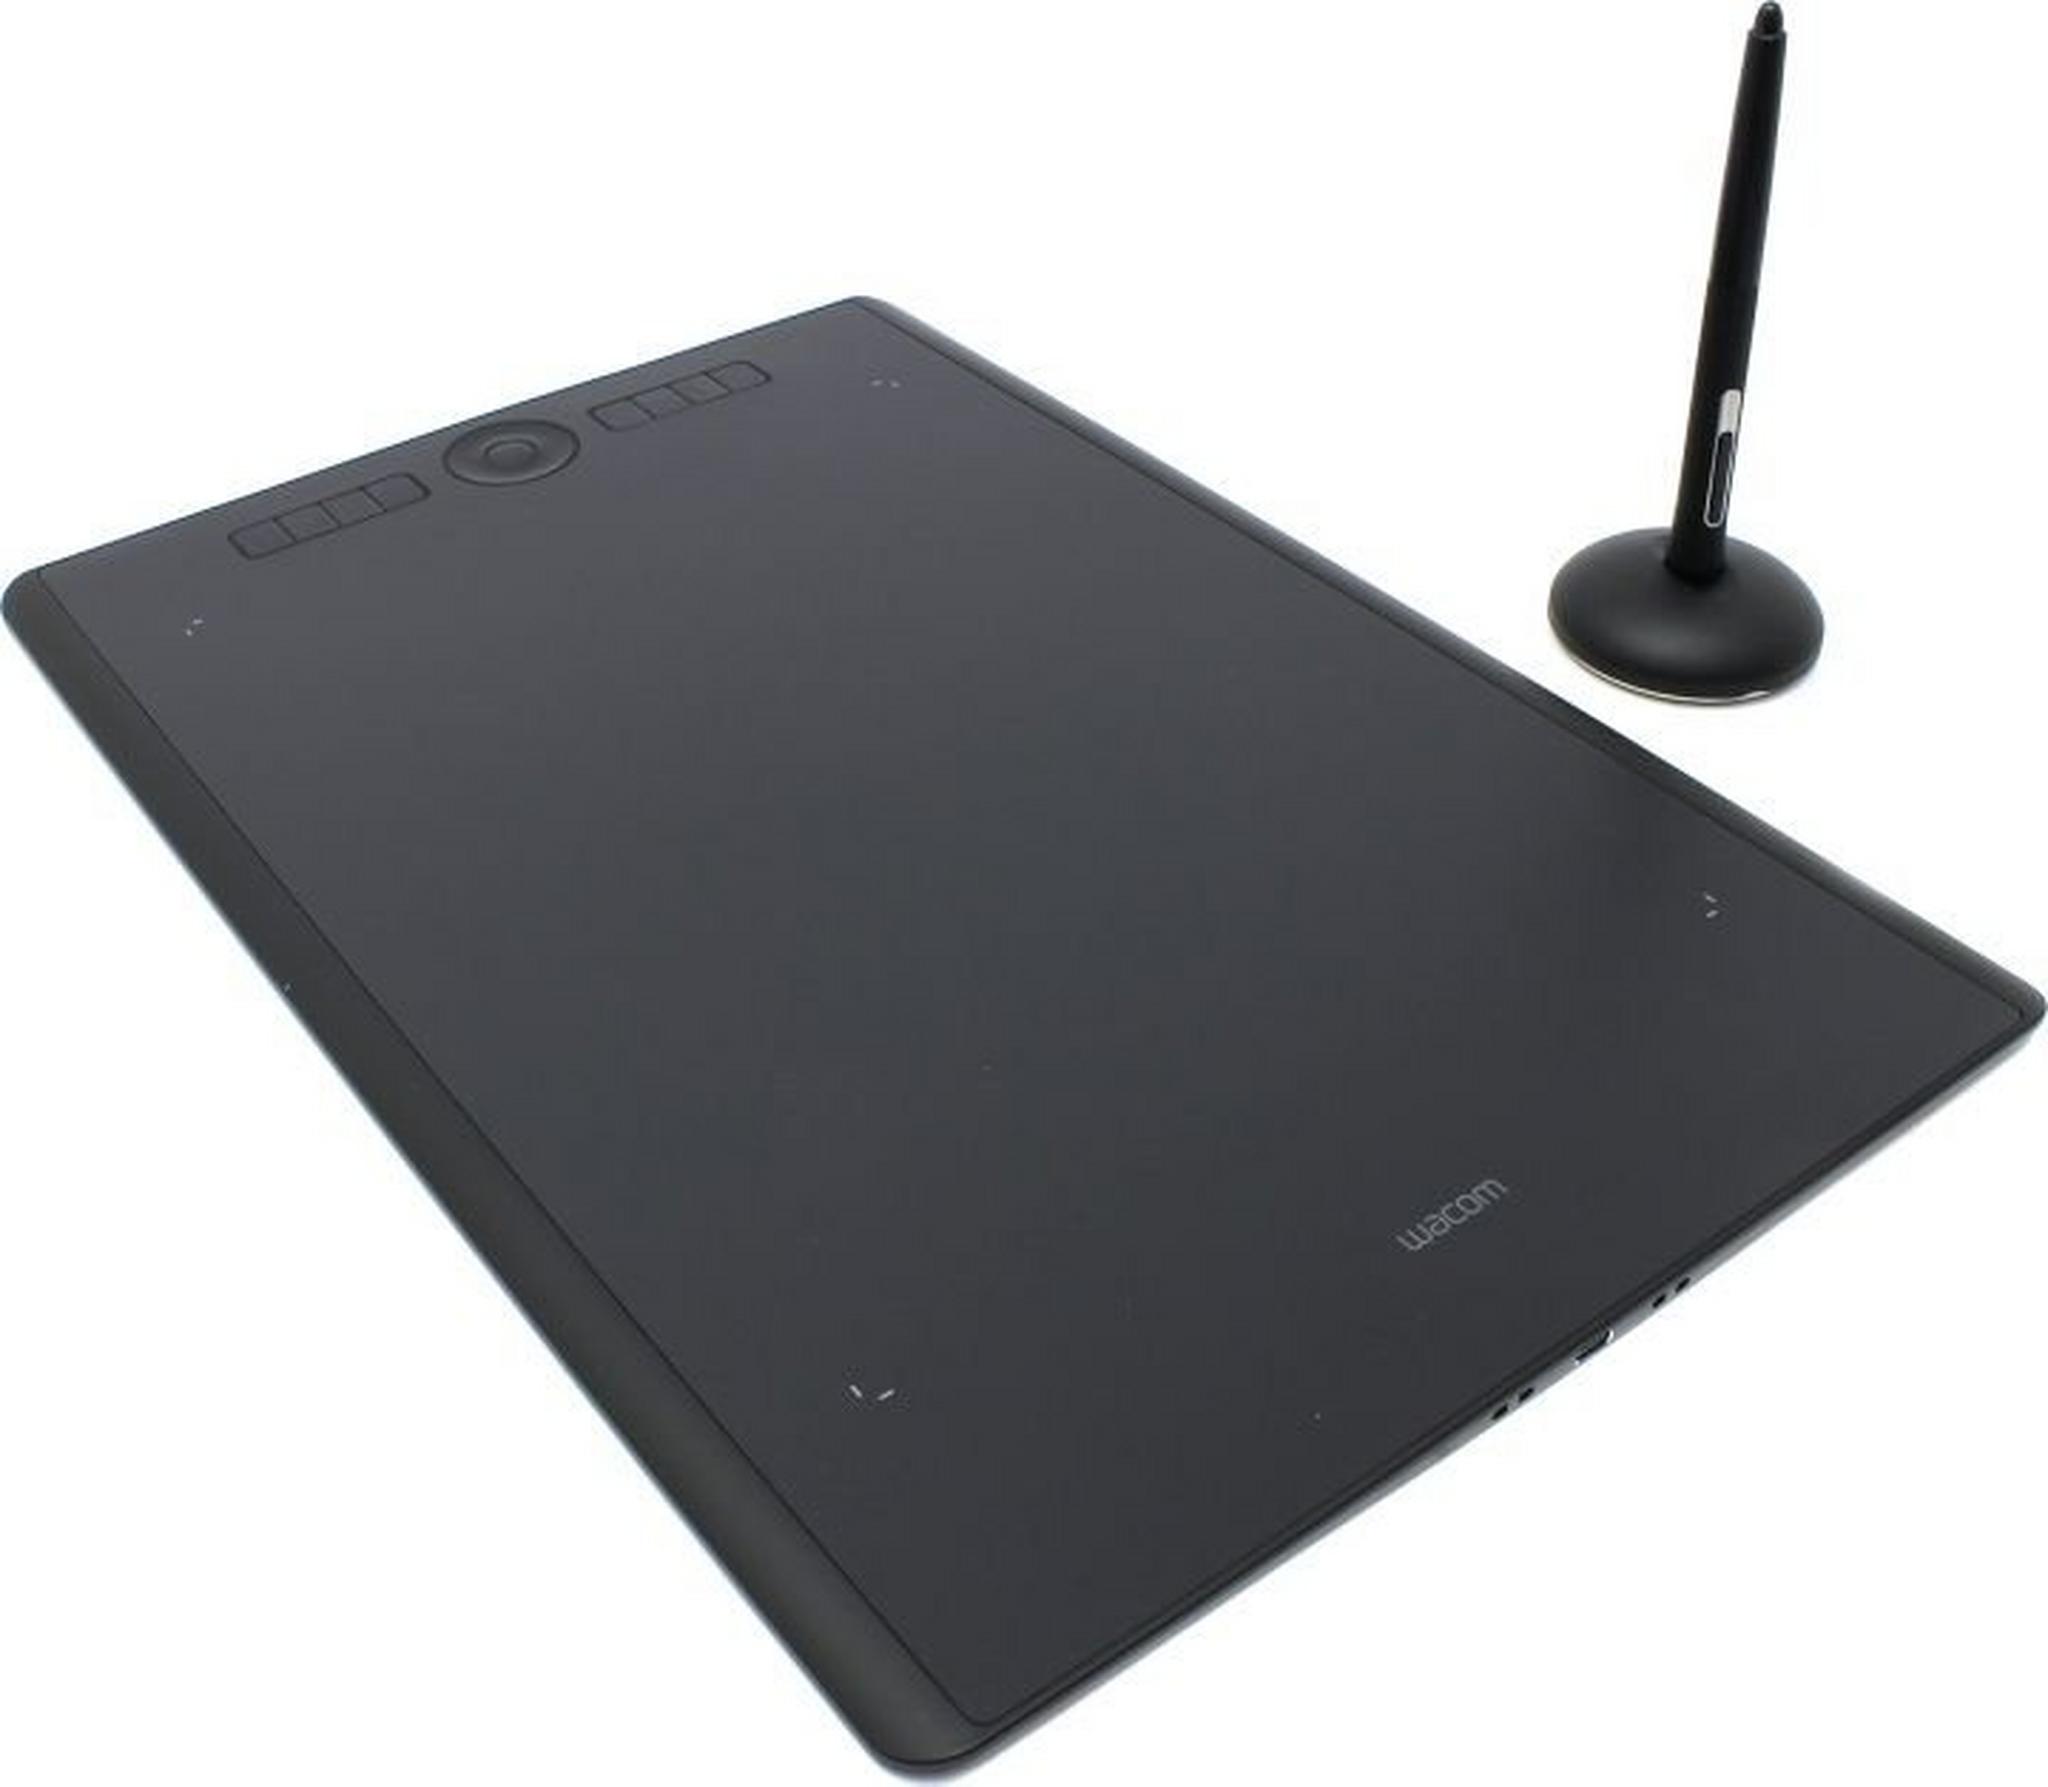 Wacom Intuos Pro Paper Edition Creative Pen Tablet Medium (PTH-660P) - Black